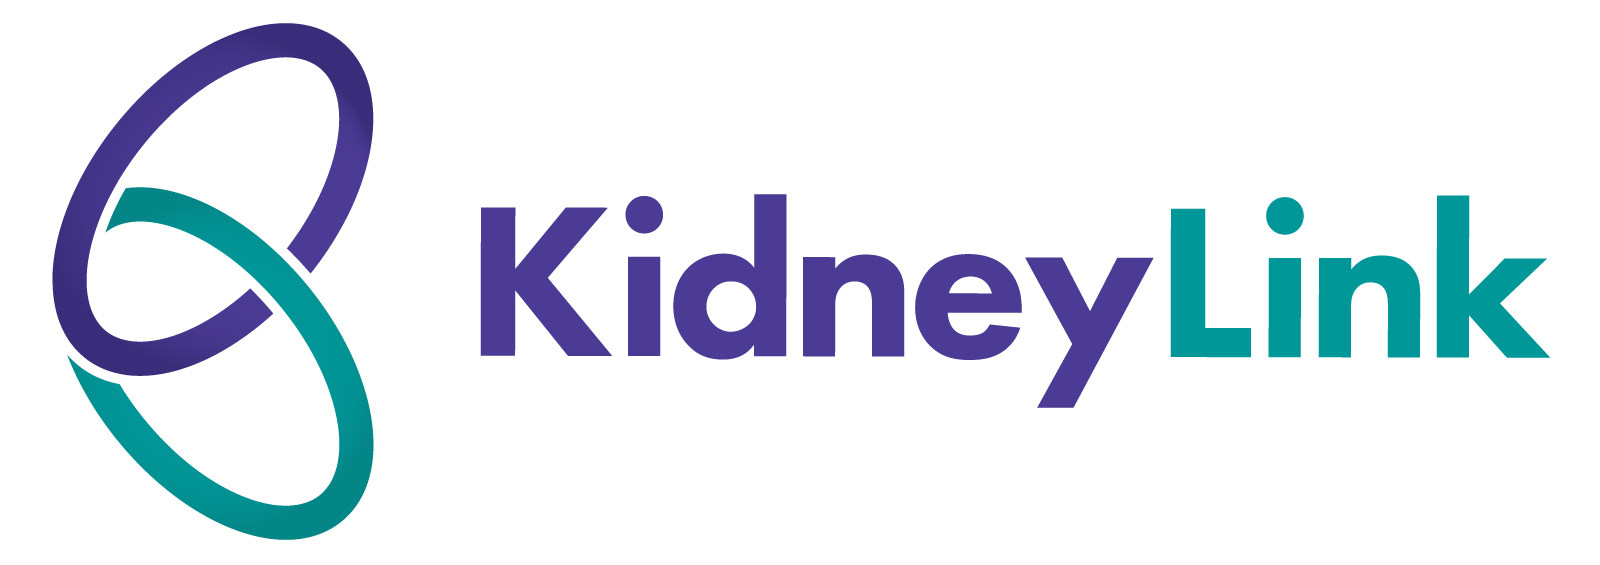 KidneyLink: Connect to kidney health innovation